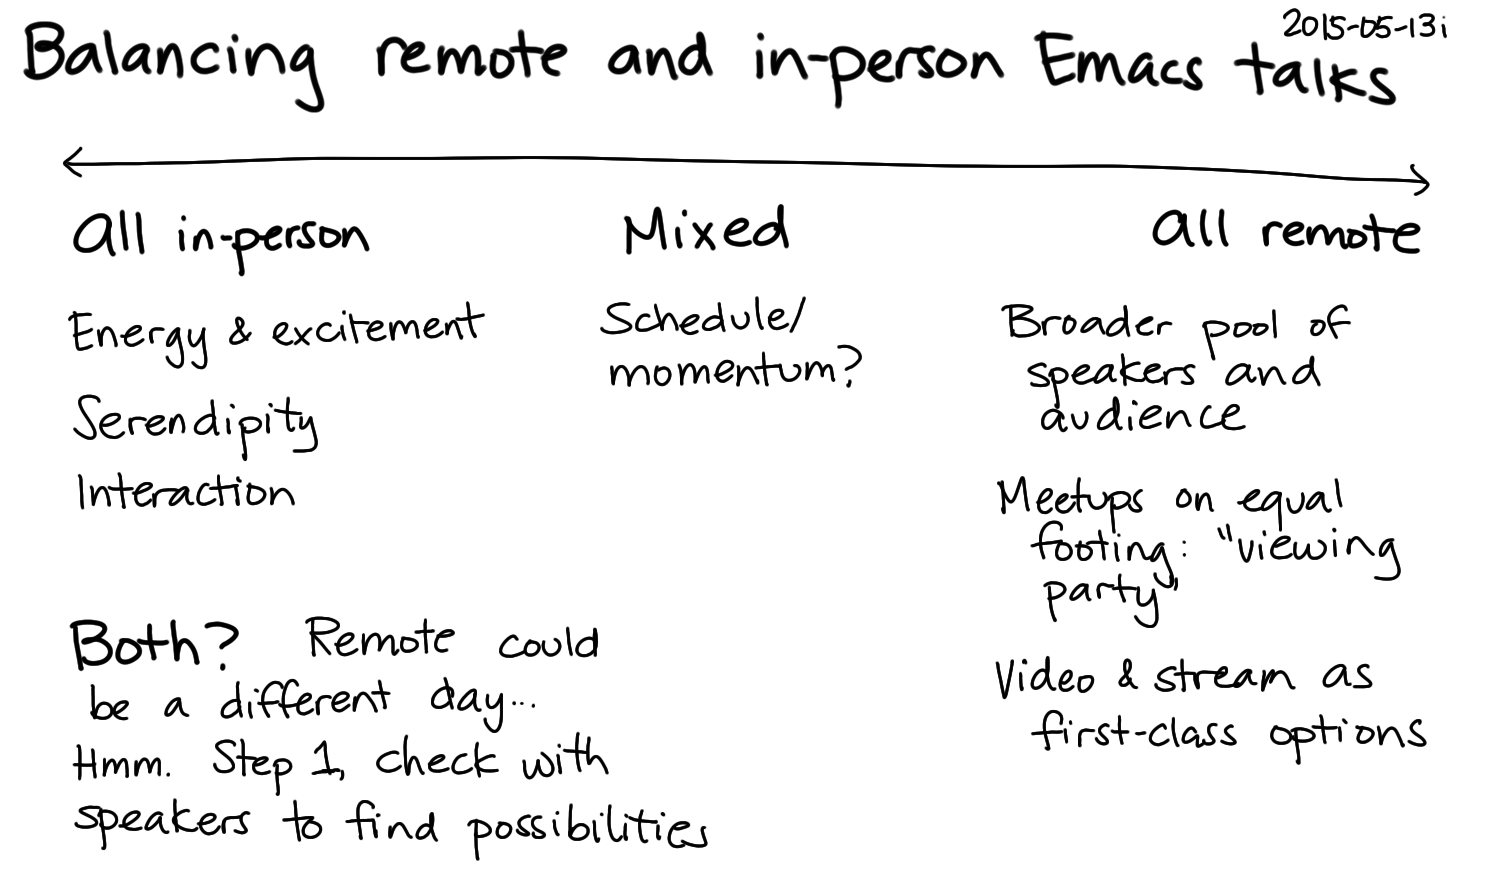 2015-05-13i Balancing remote and in-person Emacs talks -- index card #emacs #emacsconf.png